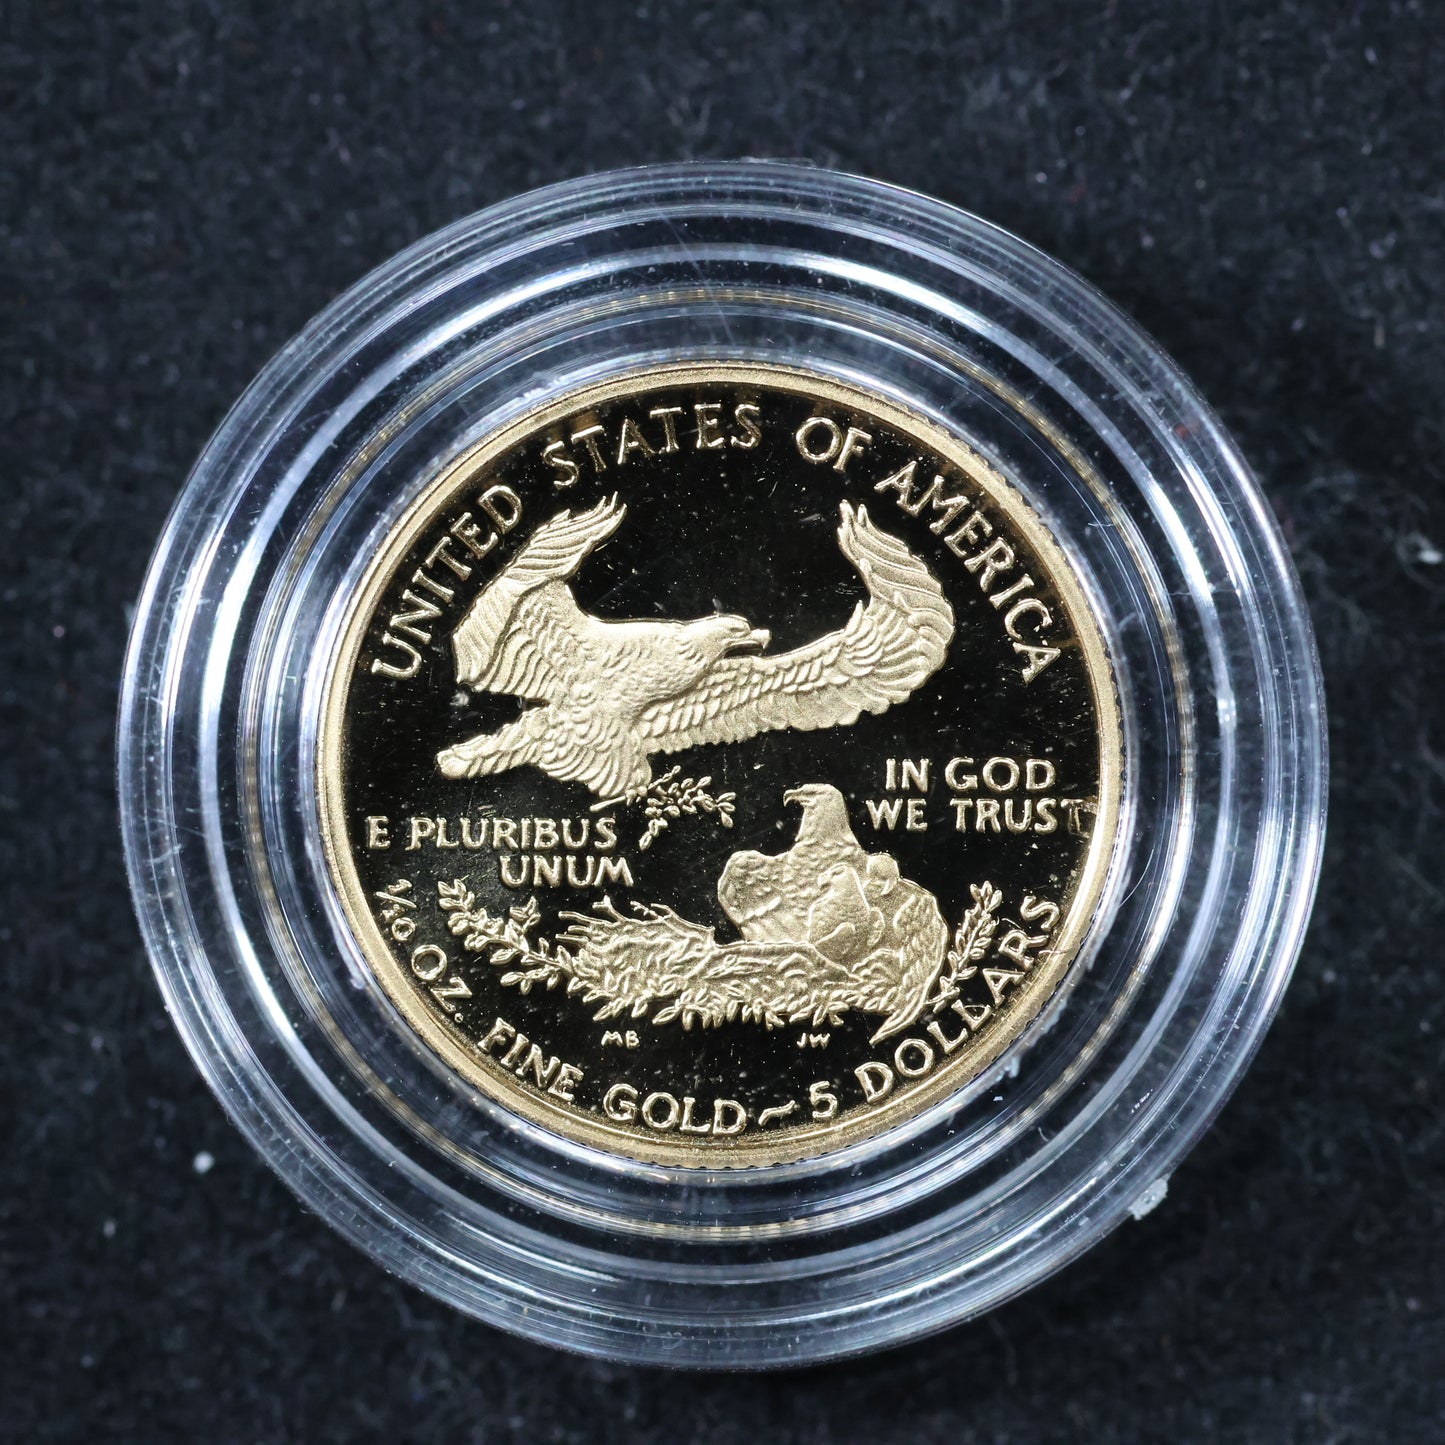 1996 1/10 Oz American Gold Eagle $5 Proof w/ Capsule - NO Box/COA